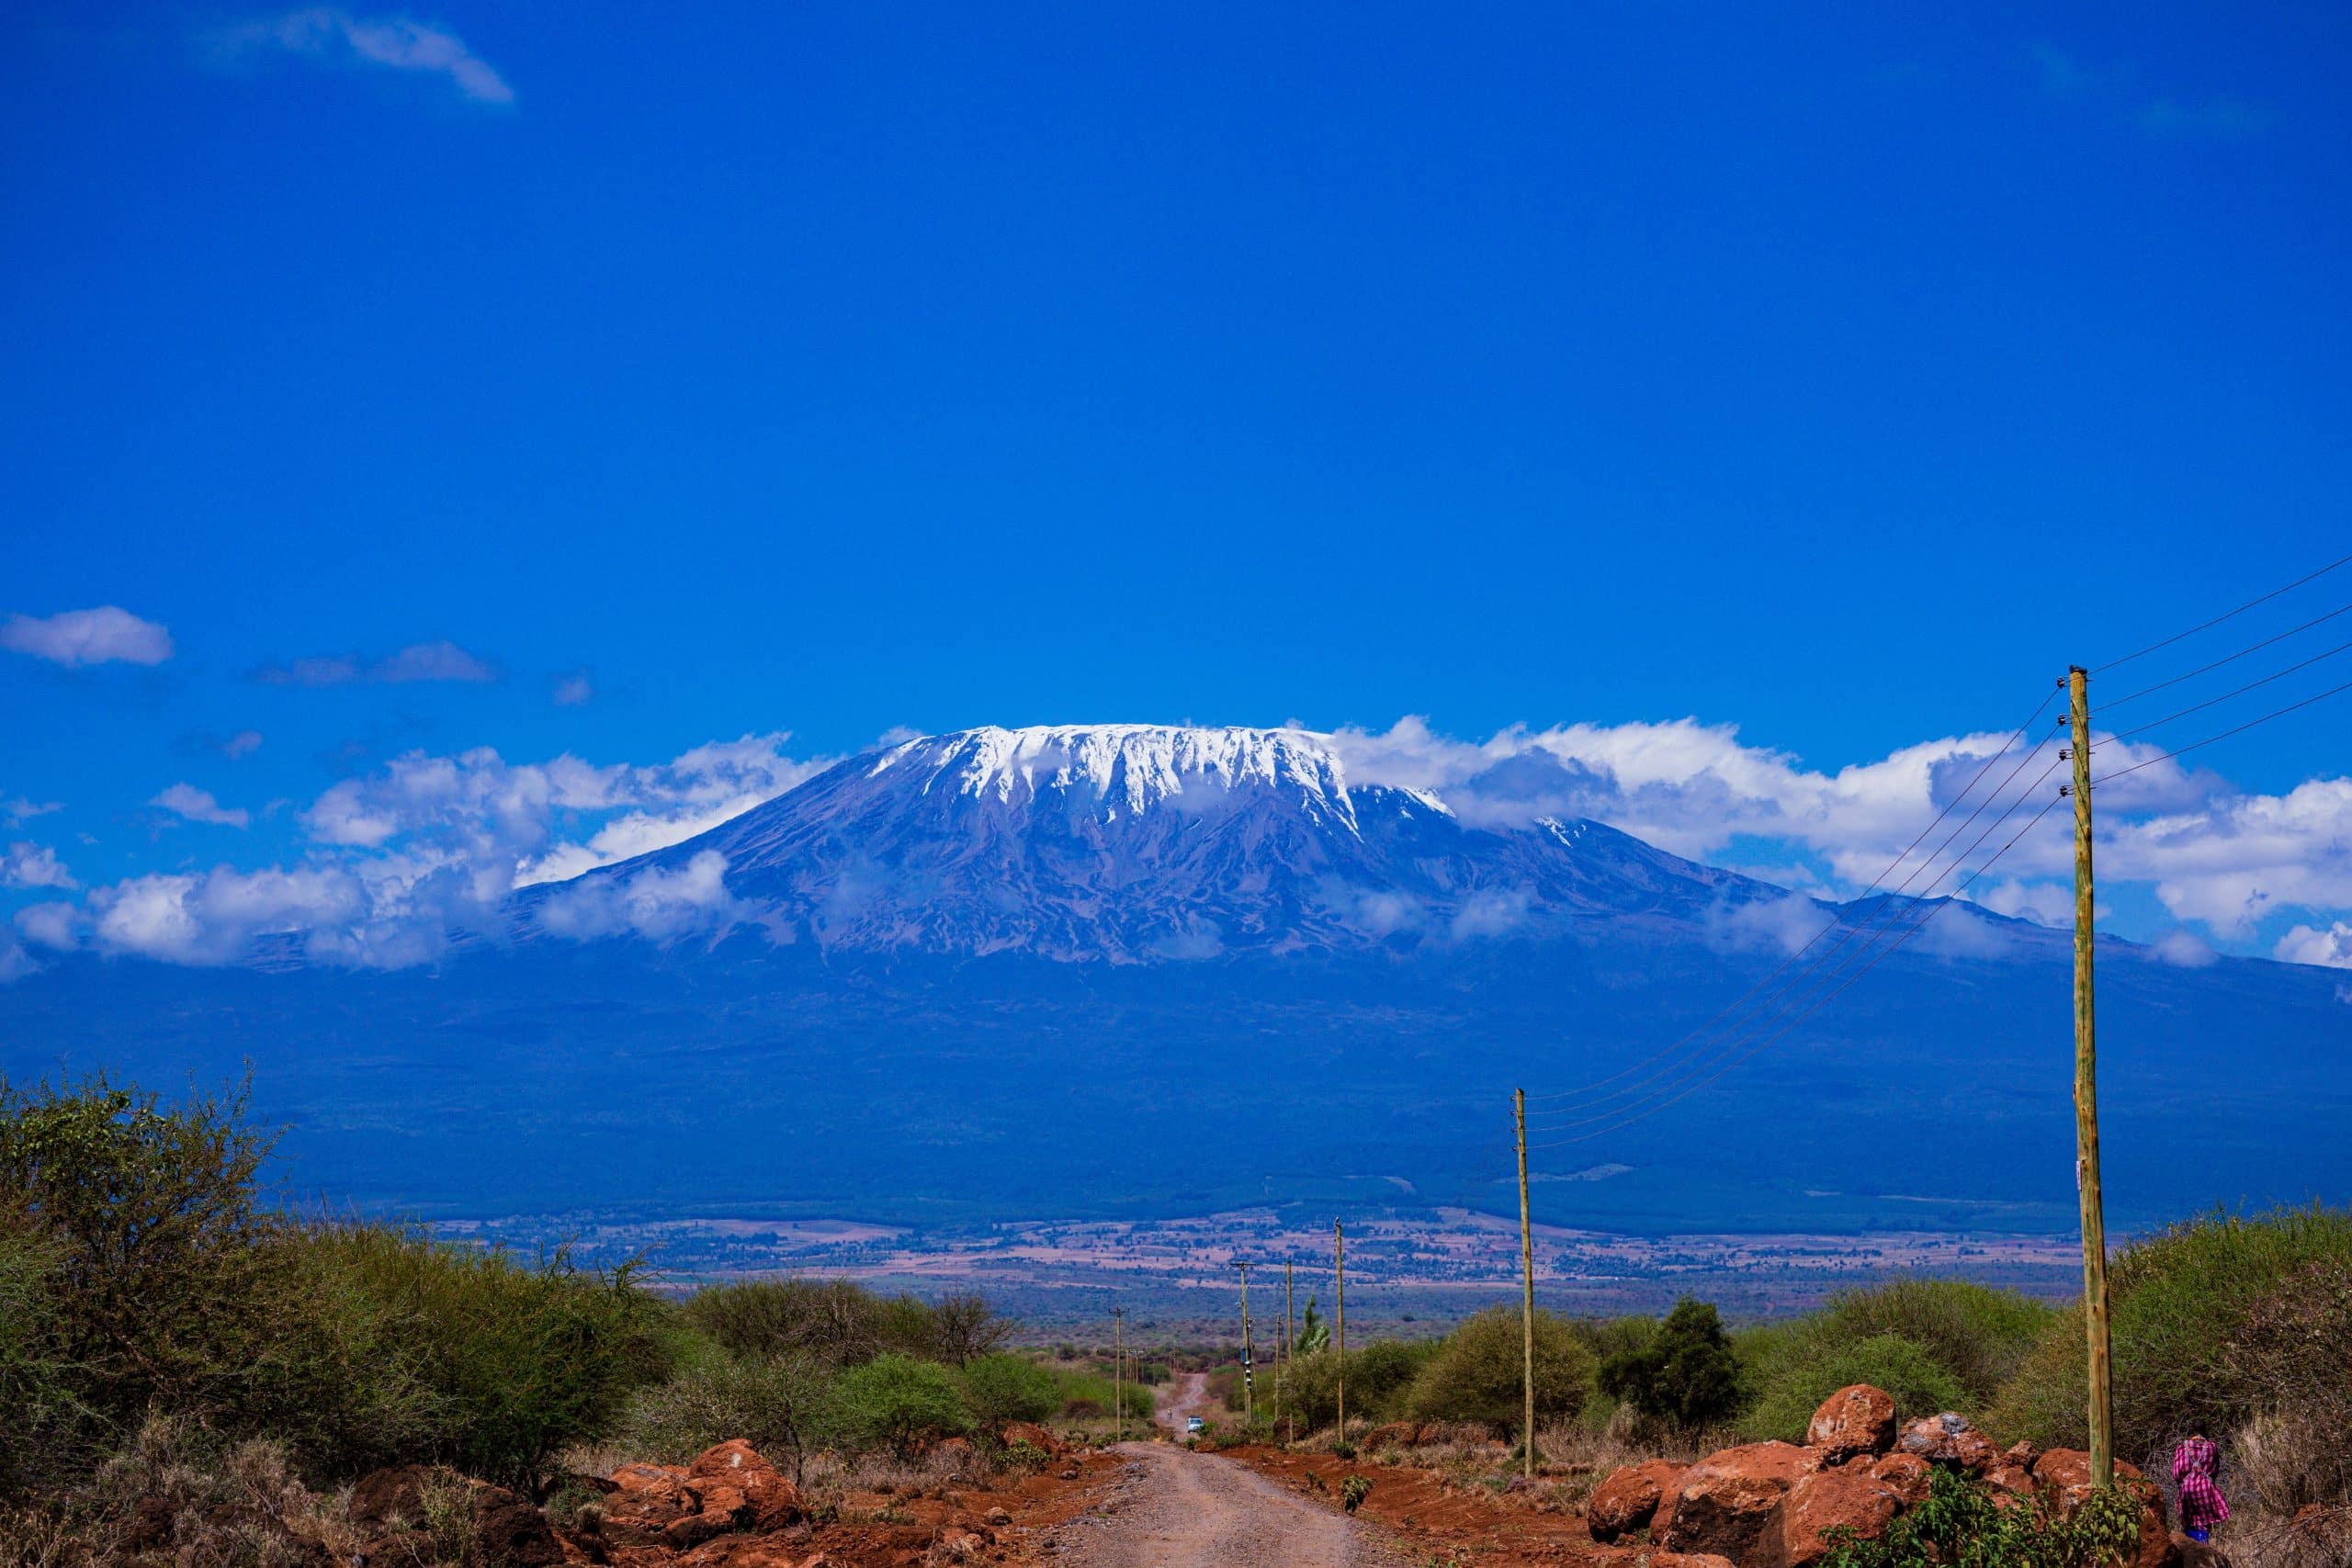 Le mont Kilimandjaro